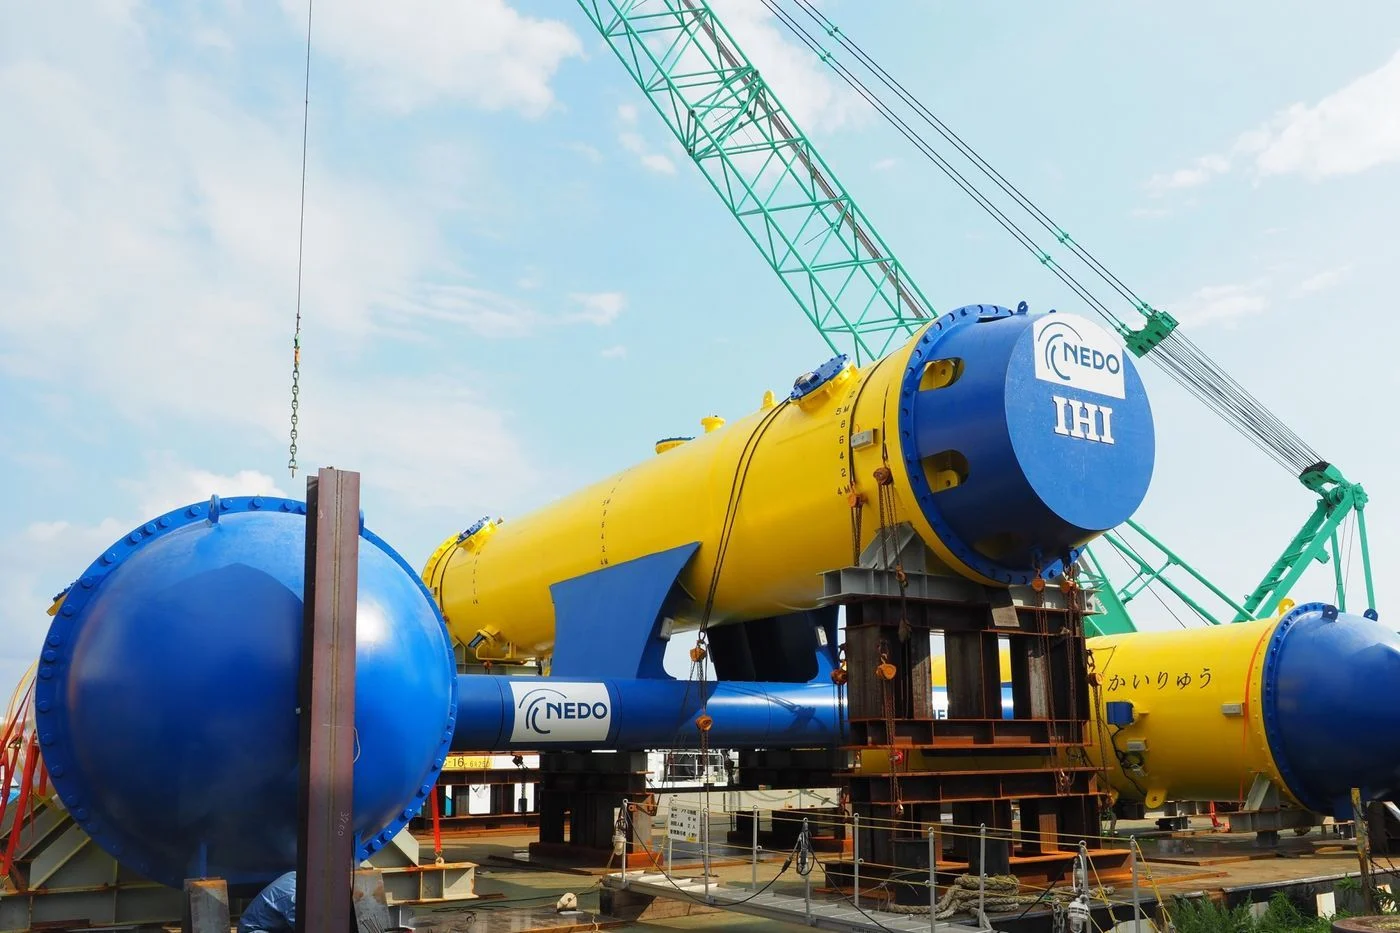 Japan has developed underwater turbine power generators weighing 330 tons